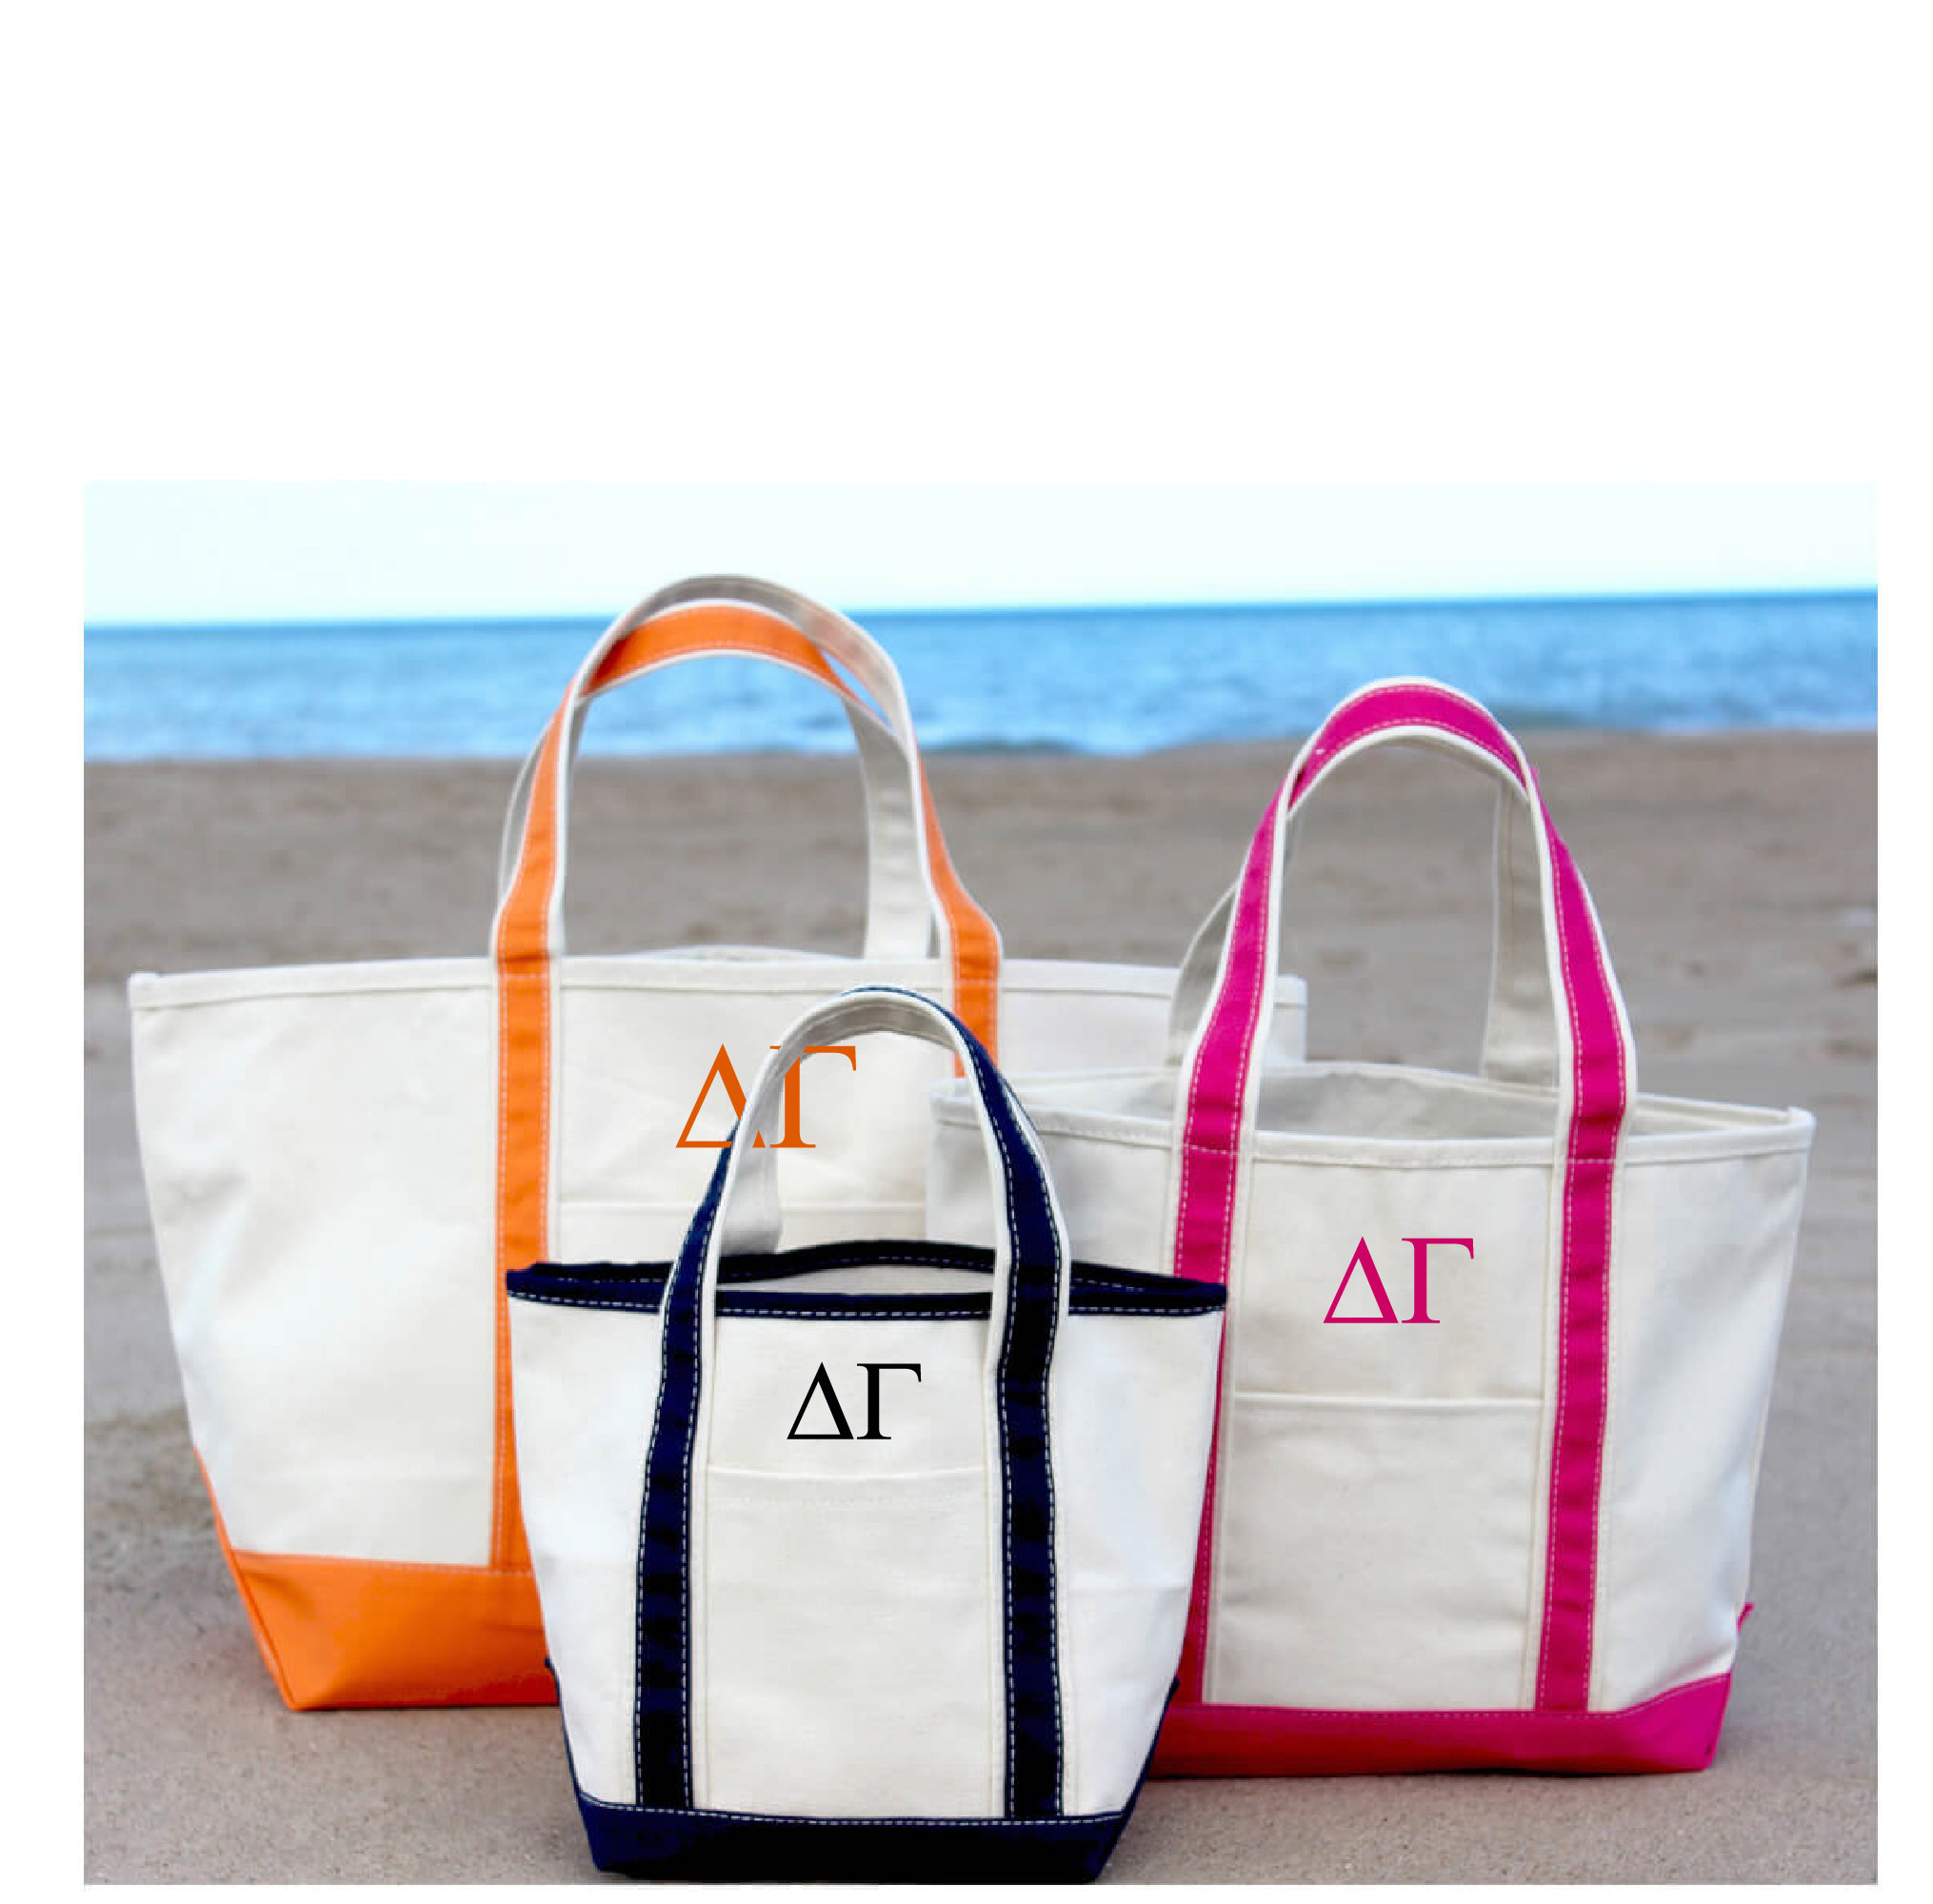 Folkulture Beach Bag for Women | 17 x 14 inch - 100% Cotton Beach Tote Bag with Zipper, Large Woven Pool Bag, Cute Travel Beach Bag or Packable